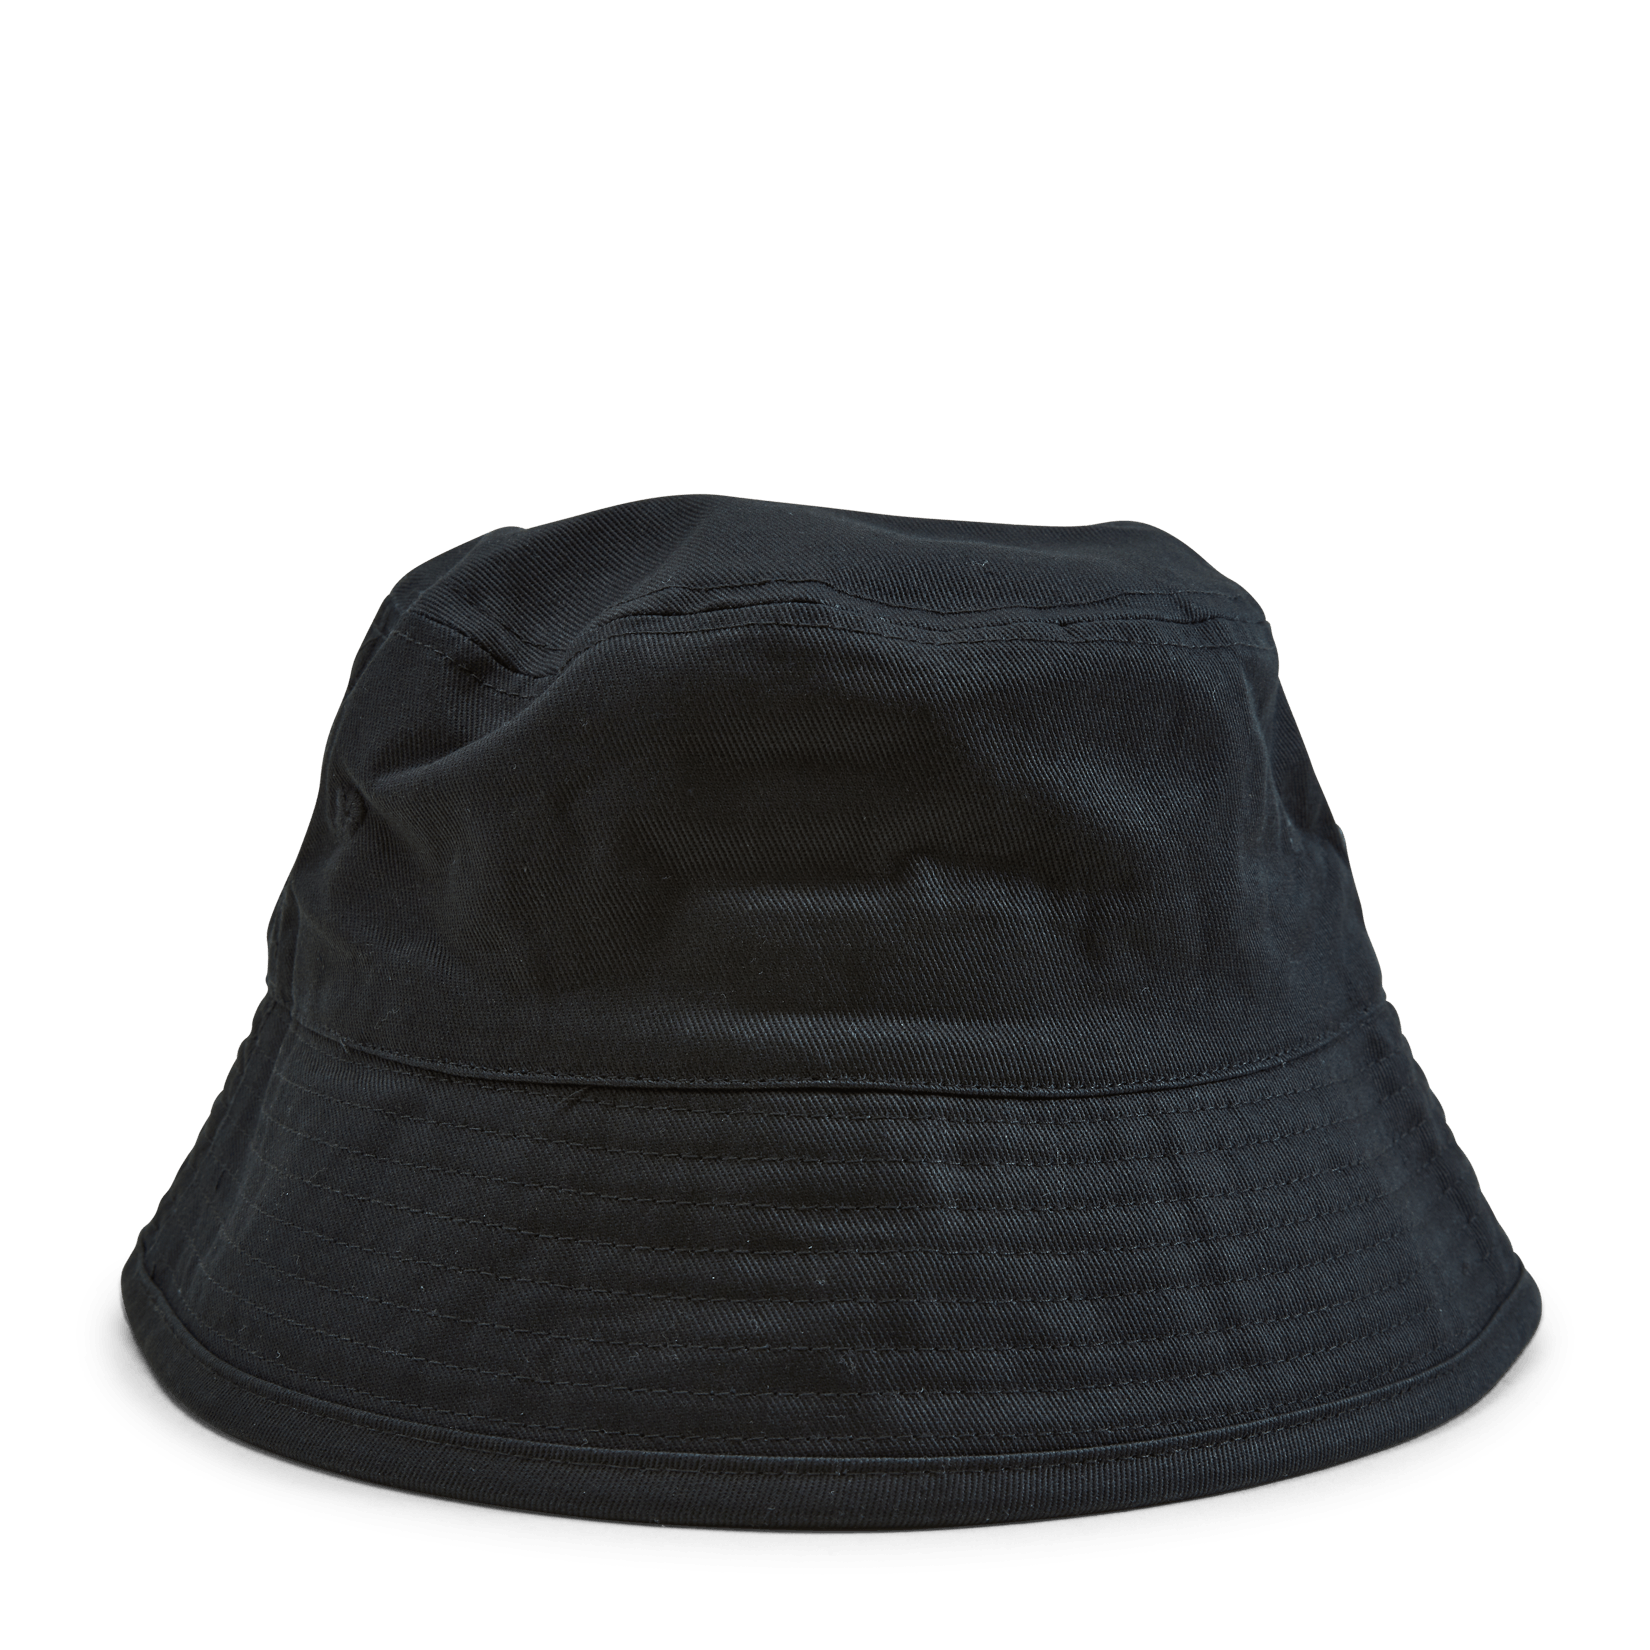 Cali Bucki Hat Black